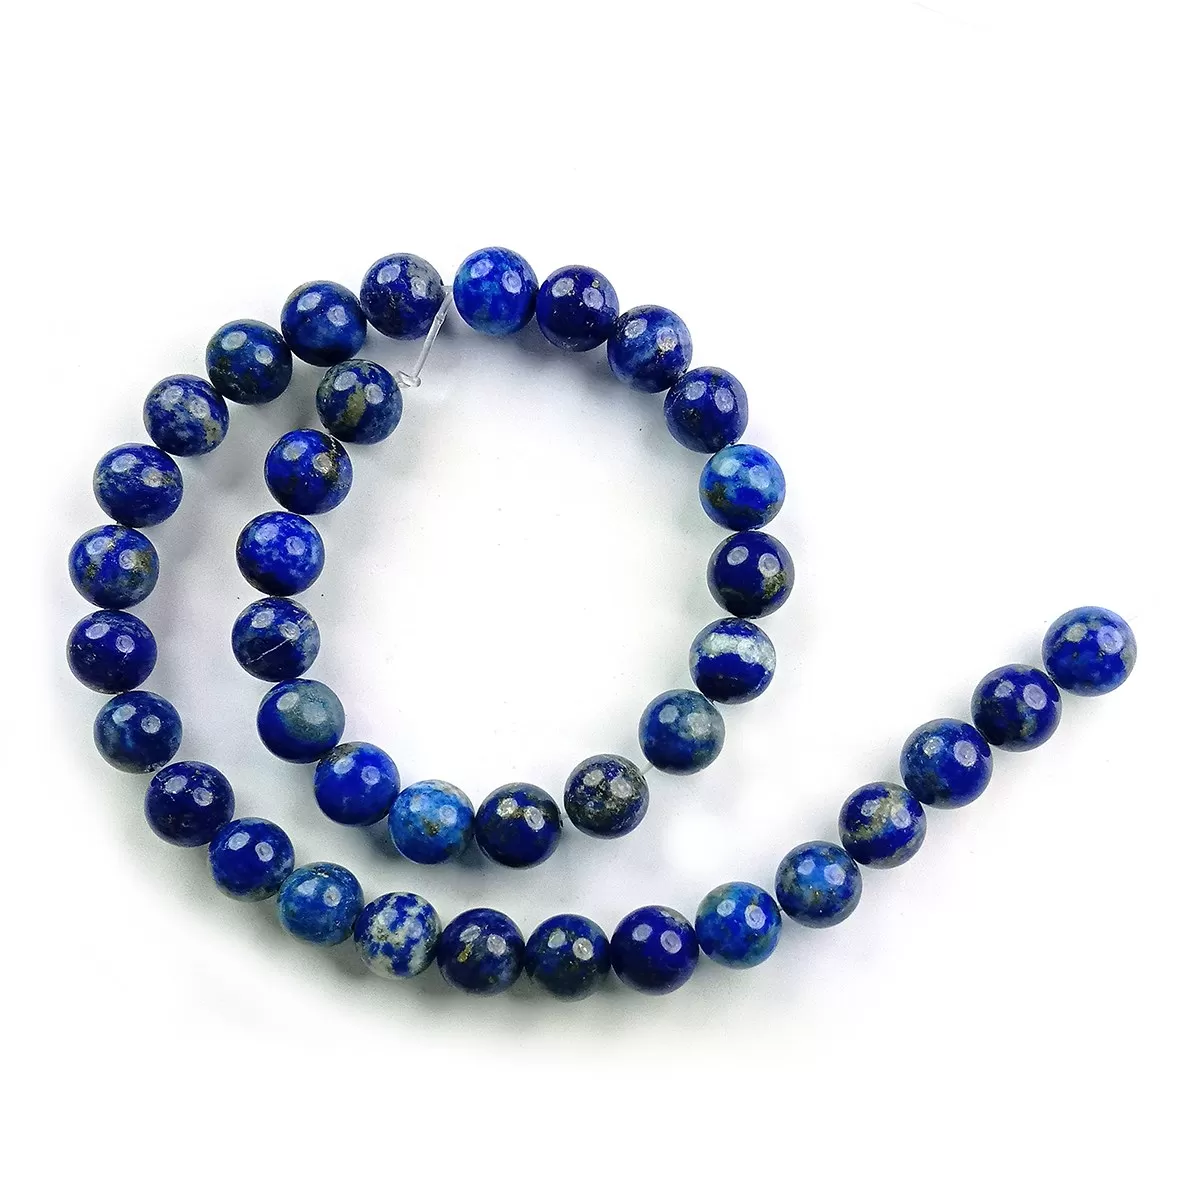 Lapis Lazuli Loose Beads 10 mm Stone Beads for Jewellery Making Bracelet Beads Mala Beads Crystal Beads for Jewellery Making Necklace/Bracelet/Mala